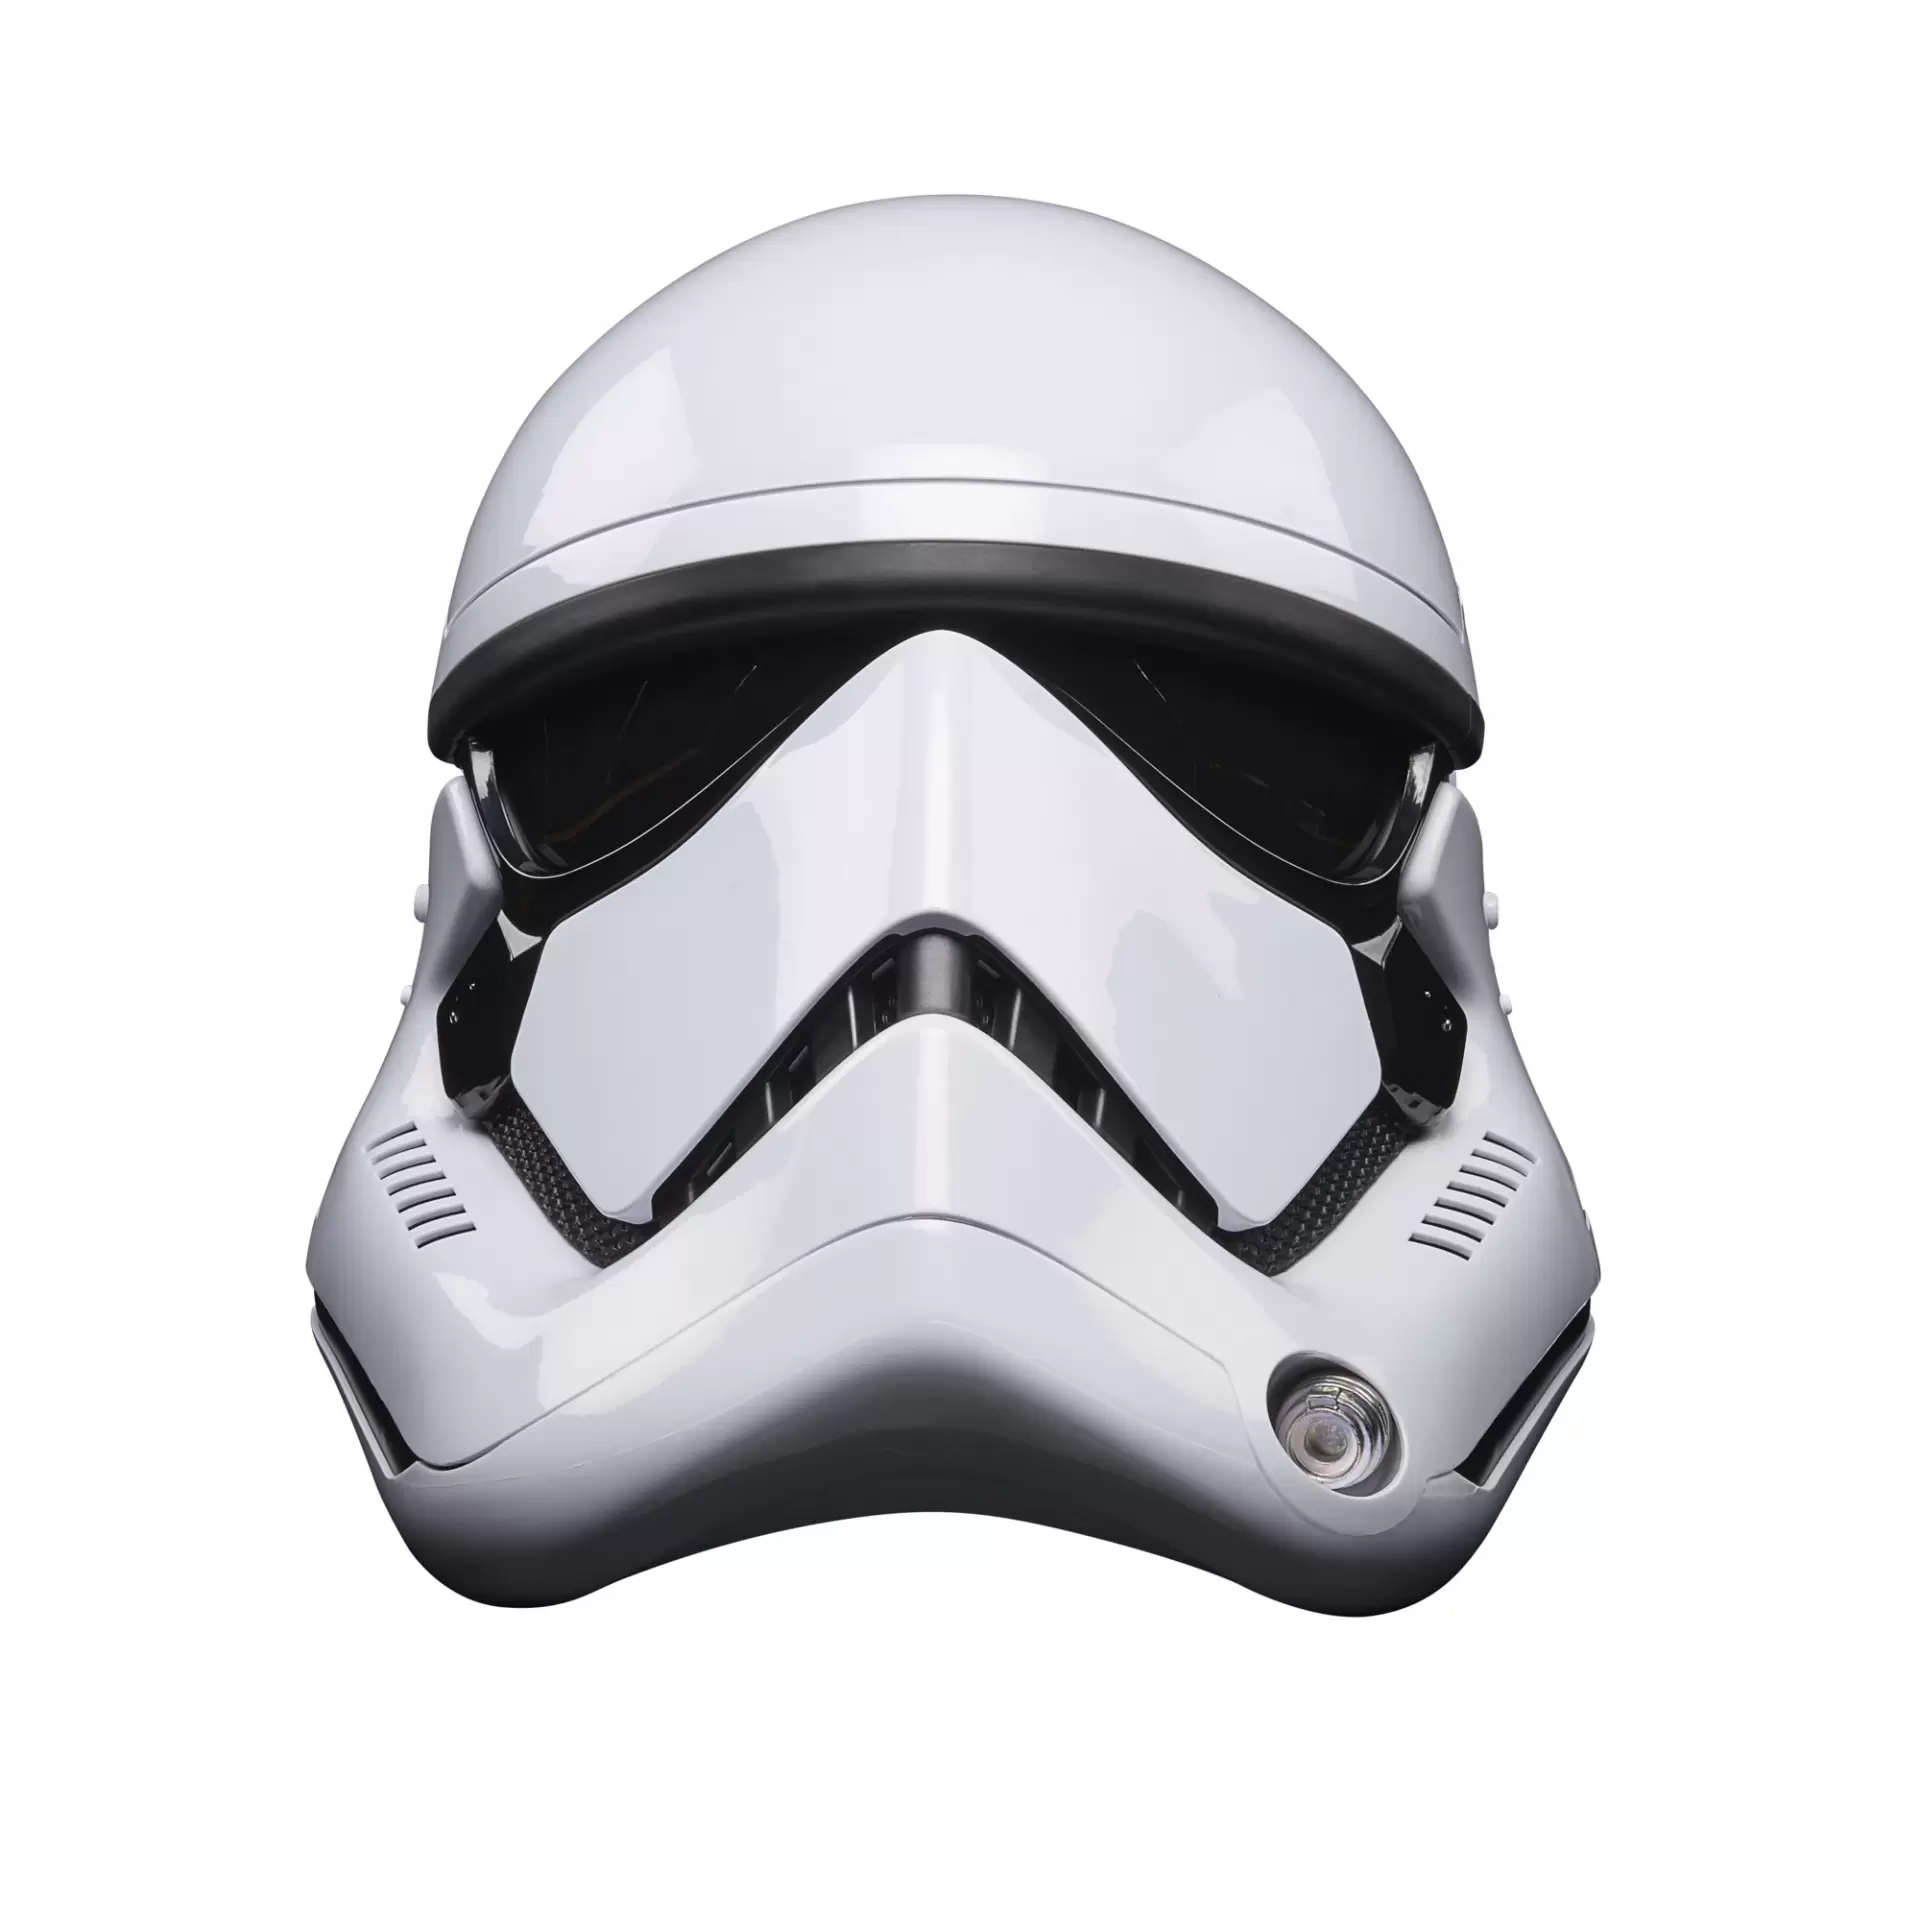 Star wars the black series first order stormtrooper electronic helmet9